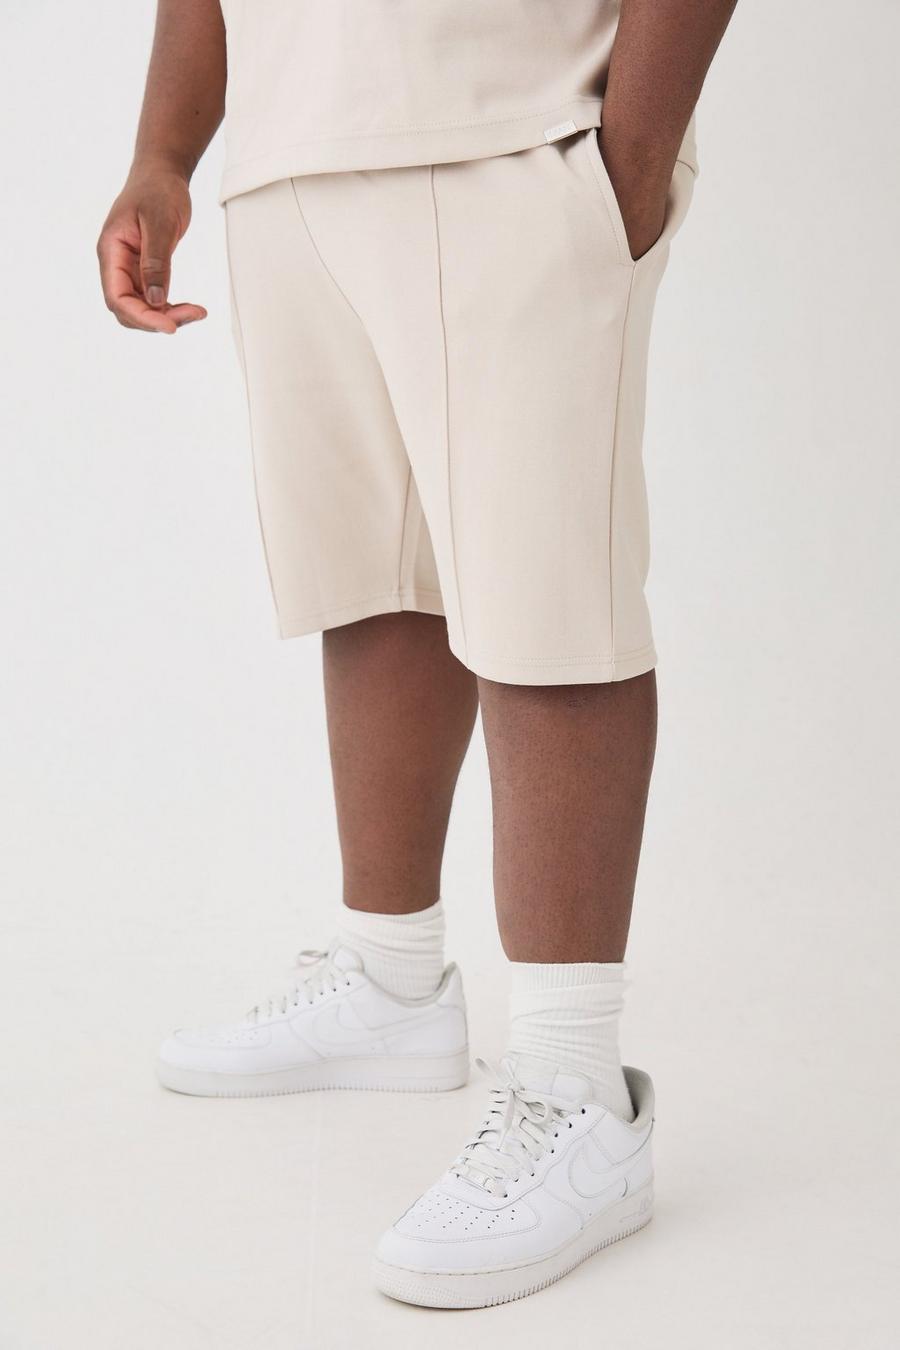 Pantaloncini Plus Size Slim Fit con nervature e nervature, Stone